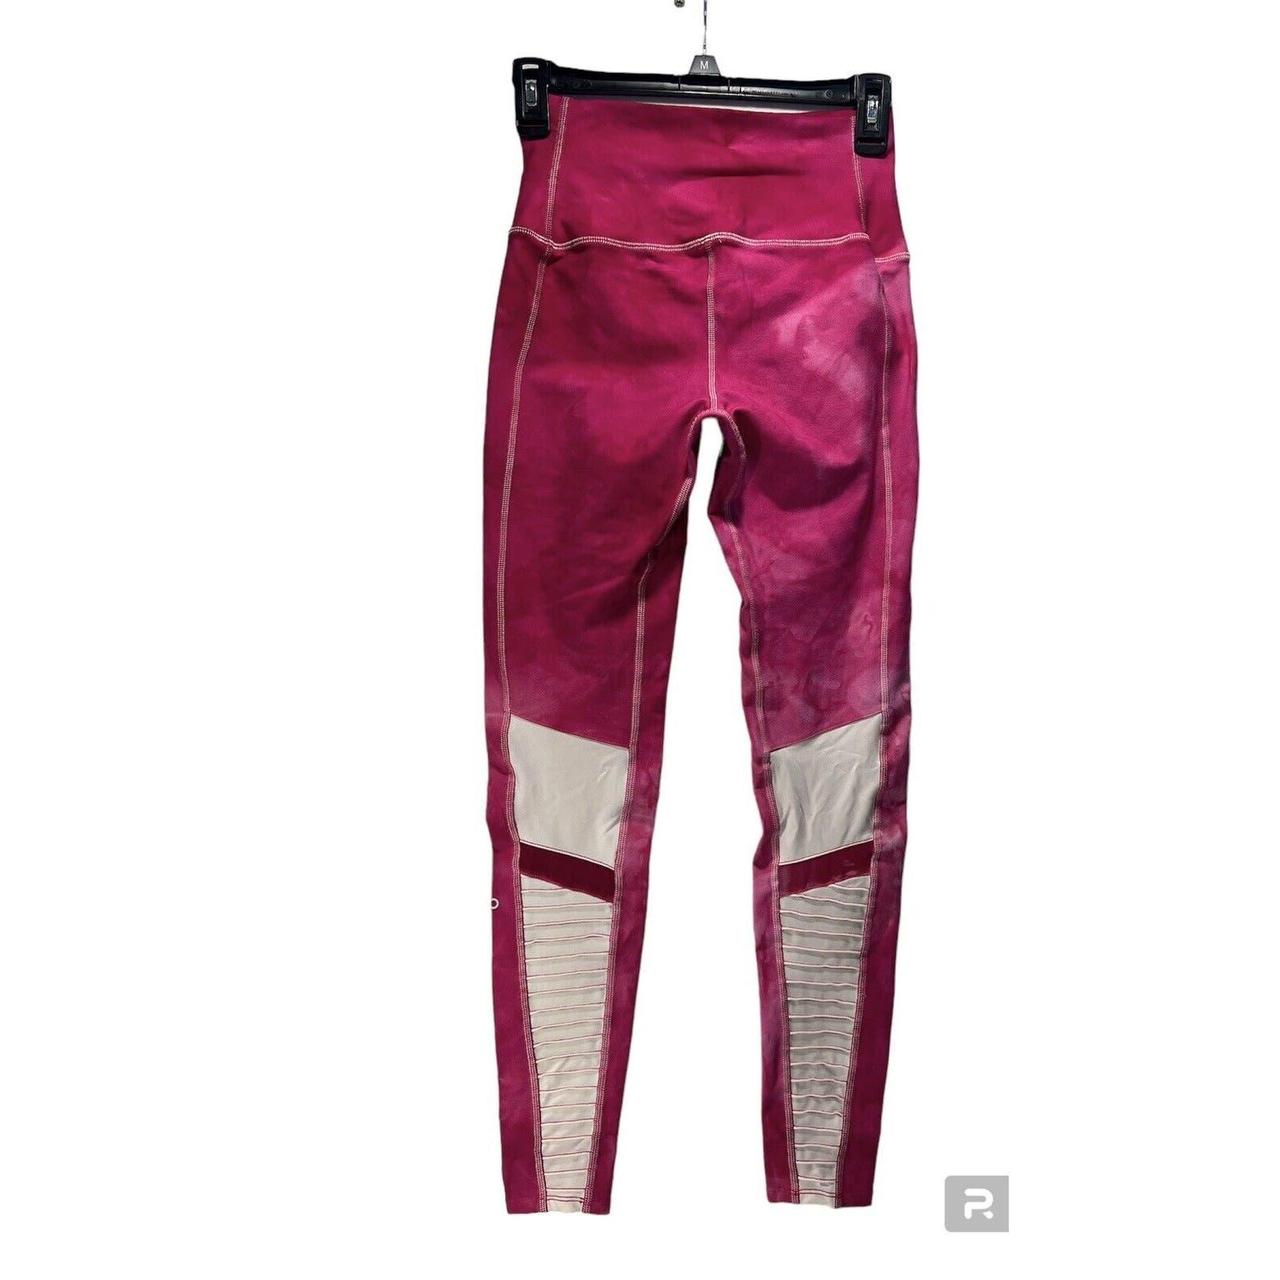 Alo Yoga high waist moto leggings tie dye pink, - Depop